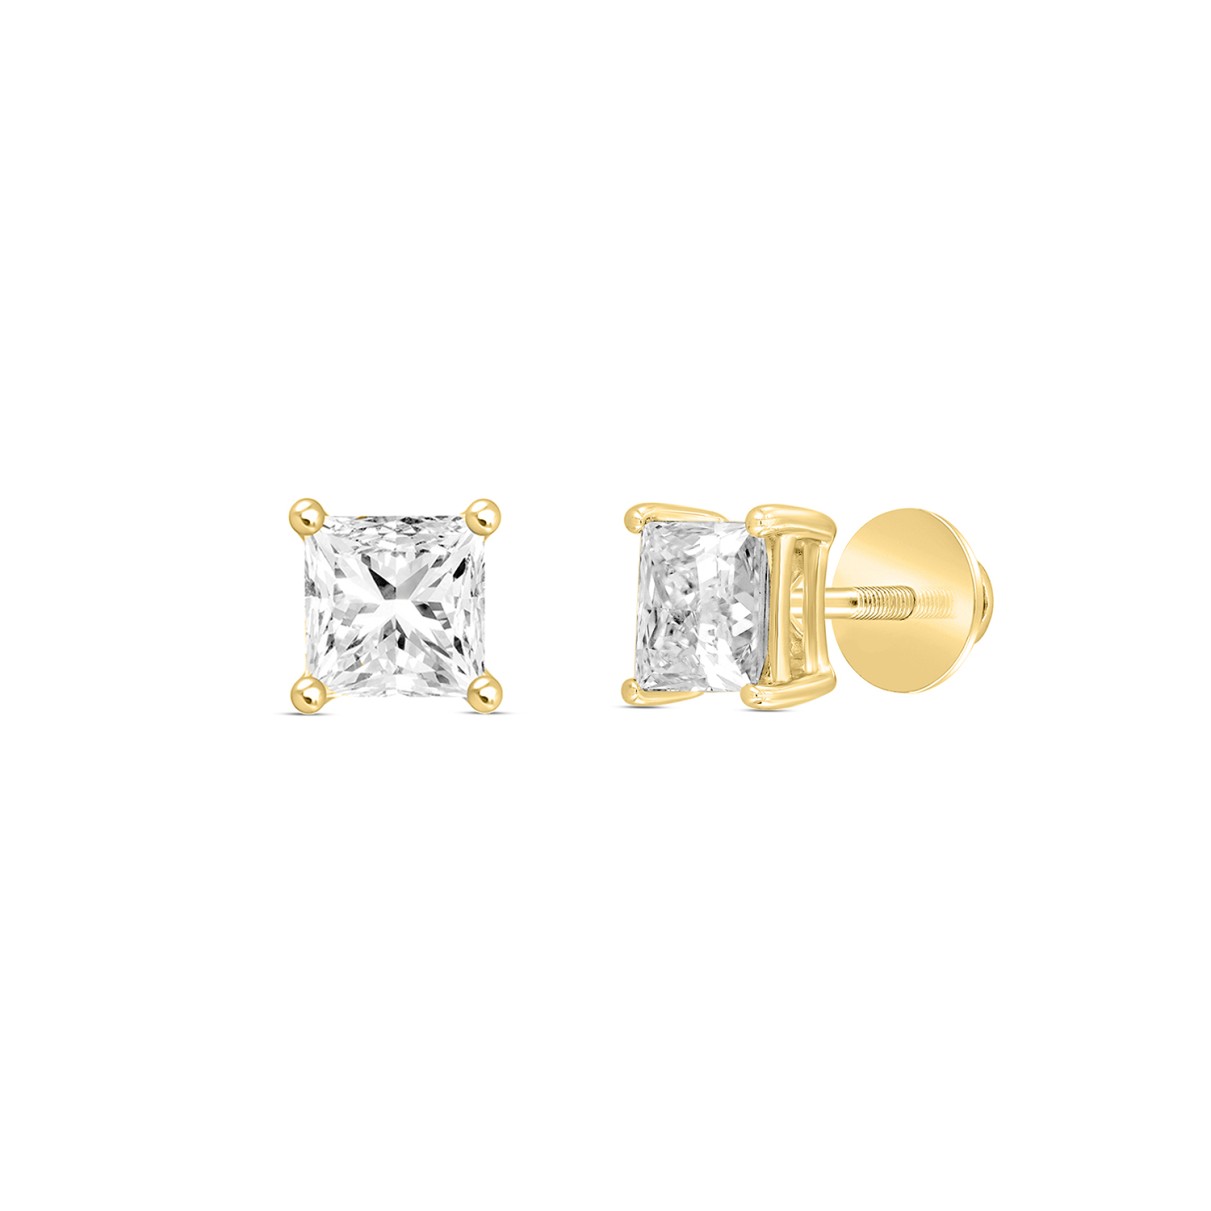 LADIES EARRINGS 1 1/2CT PRINCESS DIAMOND 14K YELLOW GOLD